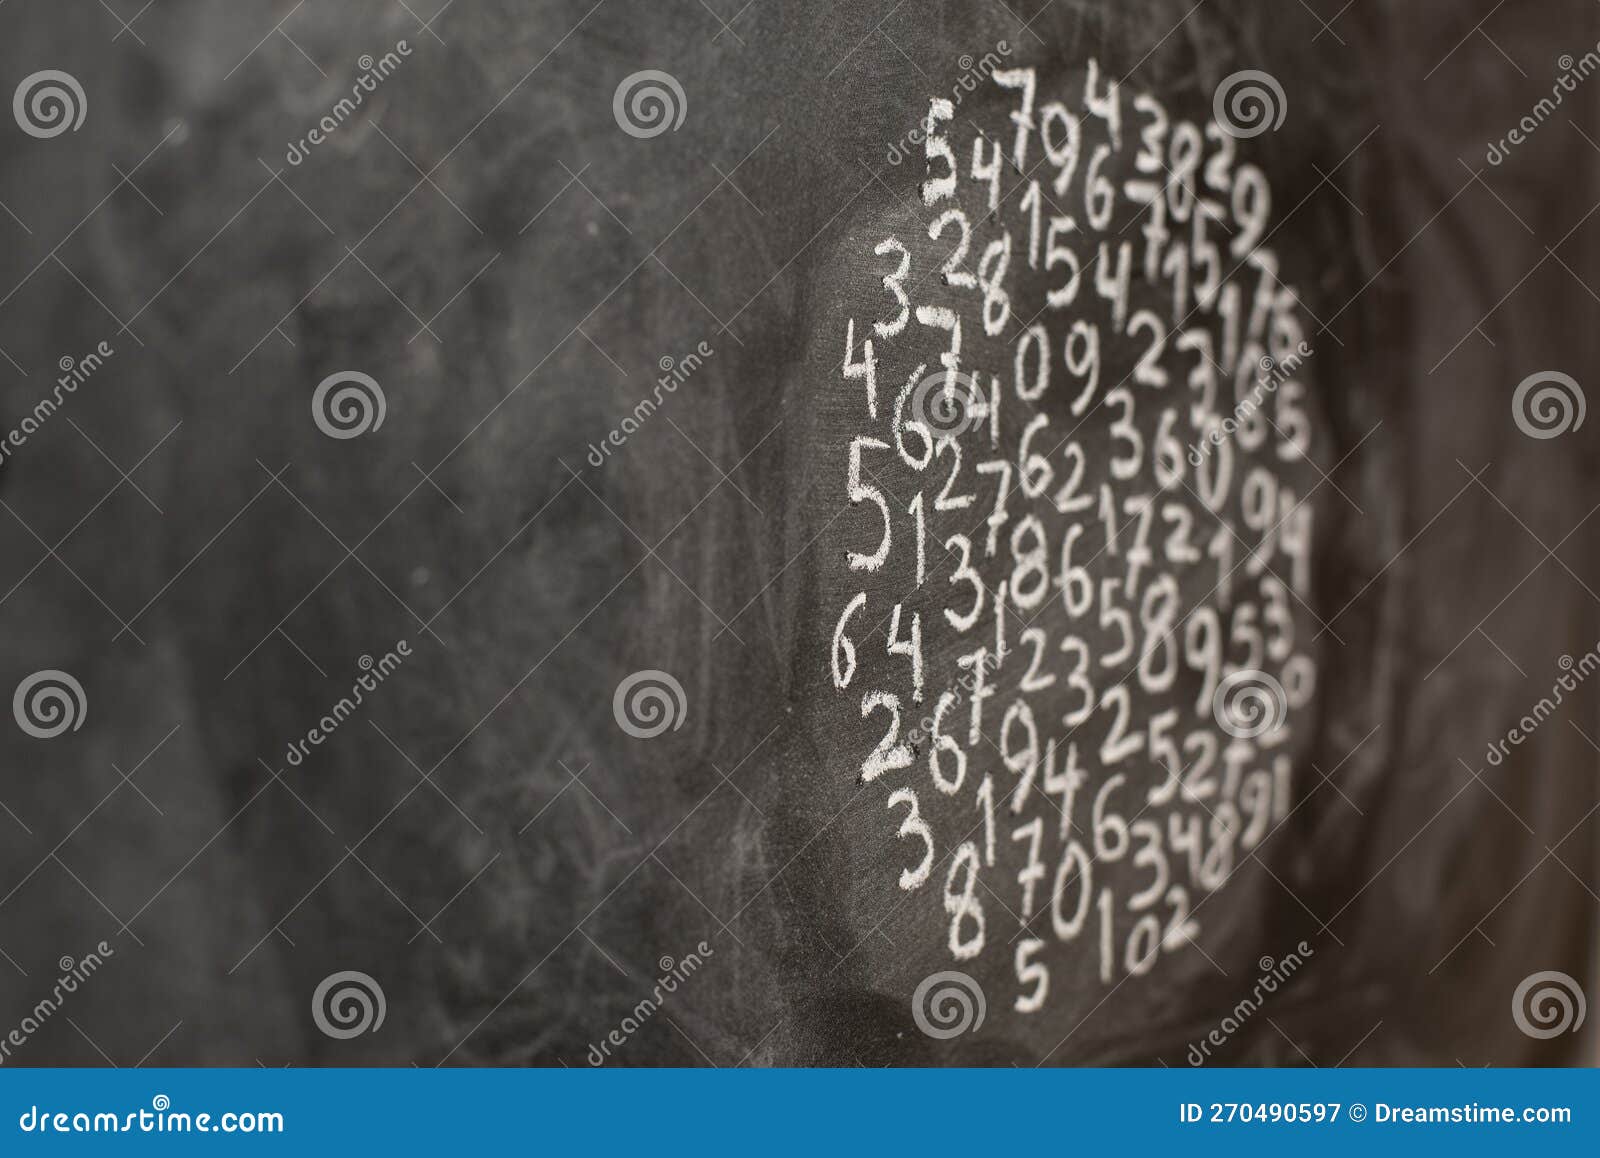 handwritten numbers on a blackboard with chalk